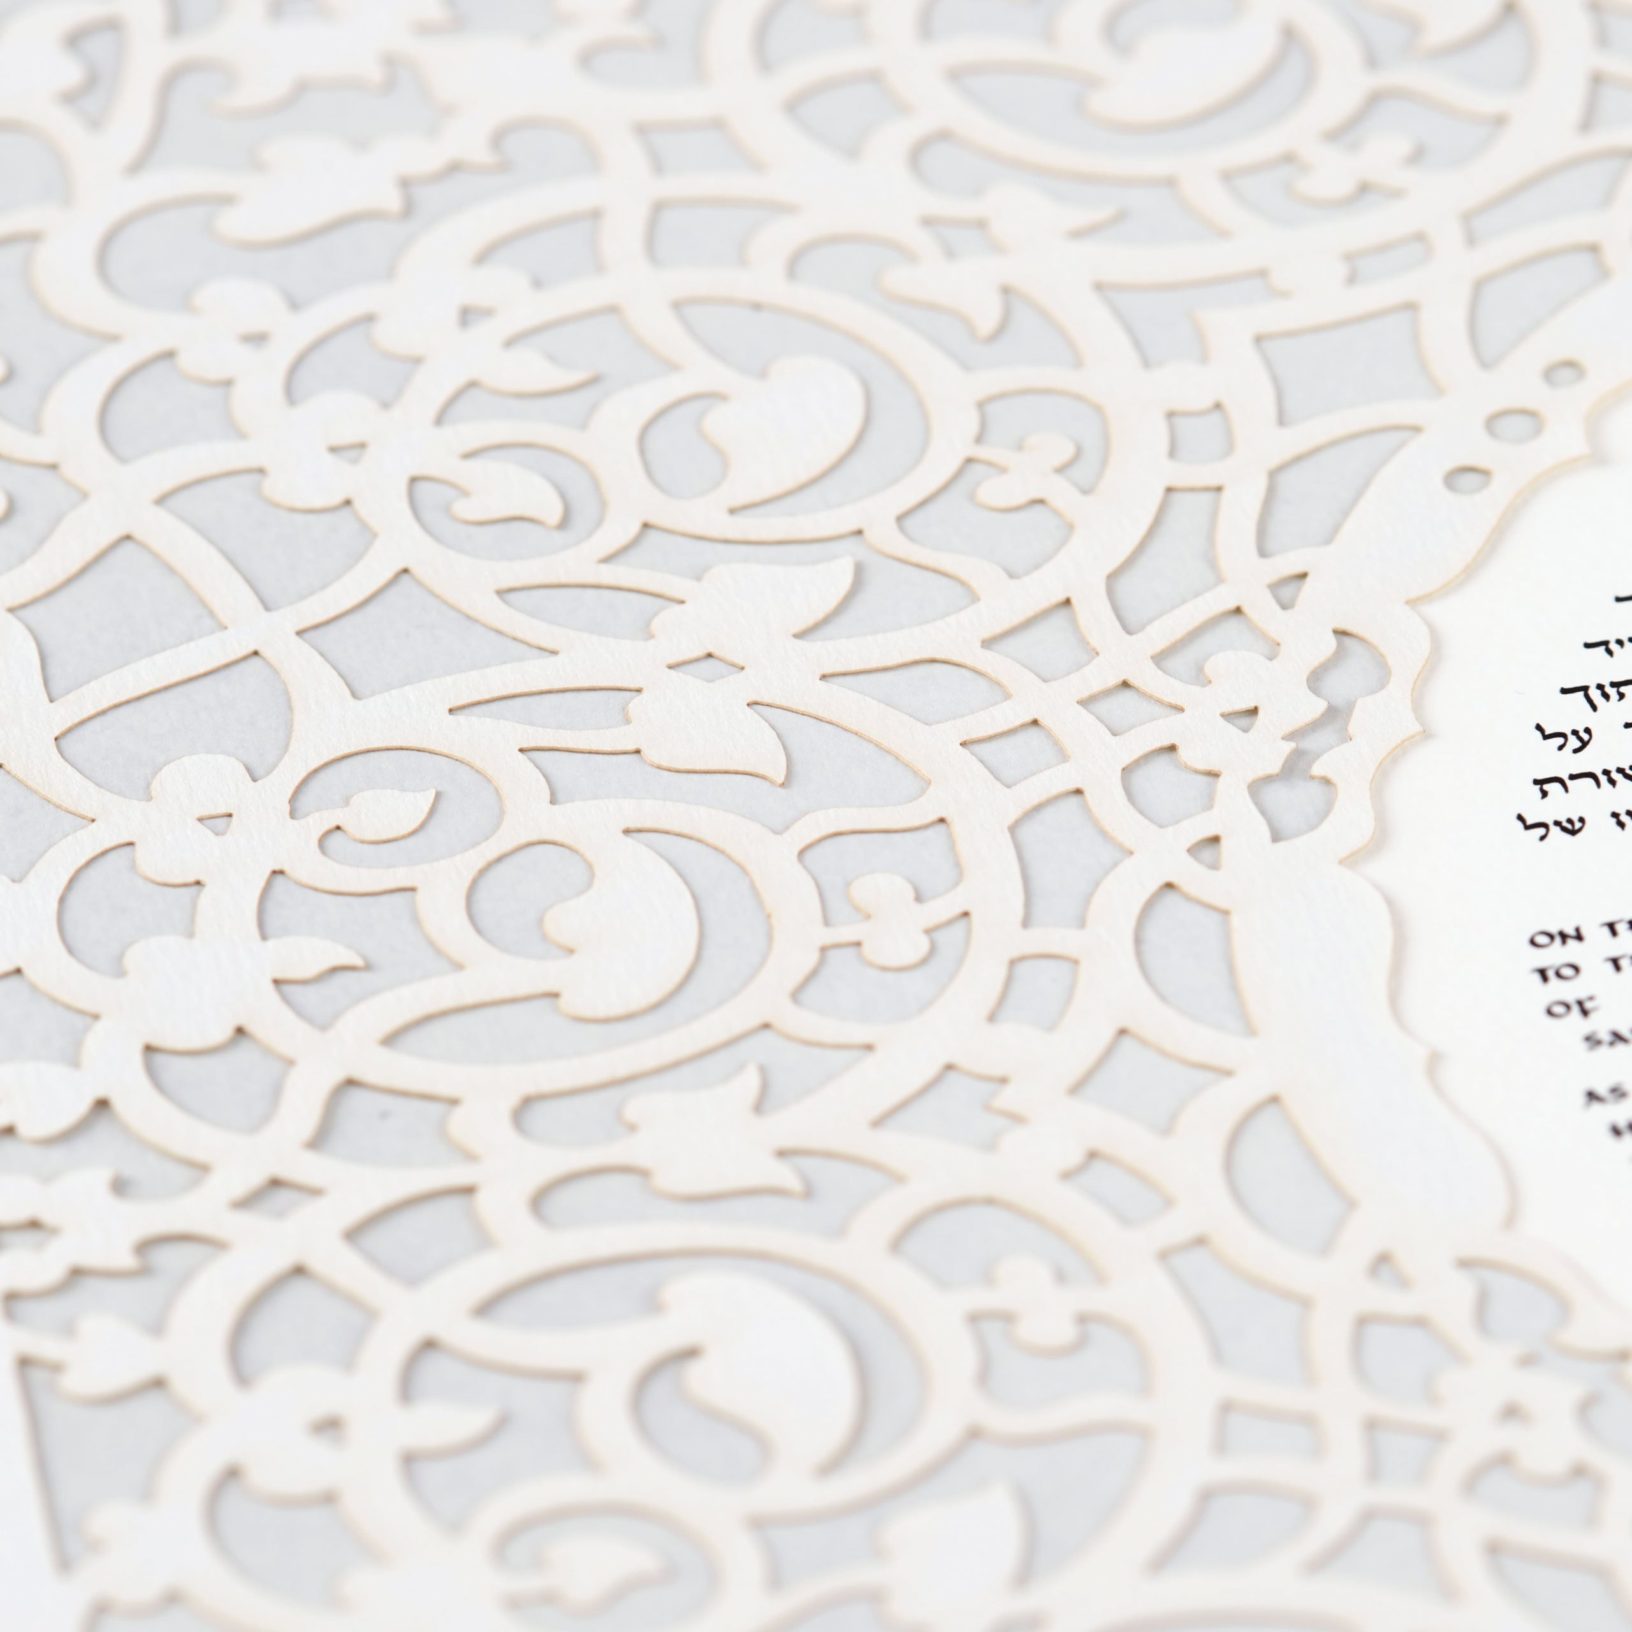 Infinite Love Papercut Ketubah Online by Susanne McGinnis